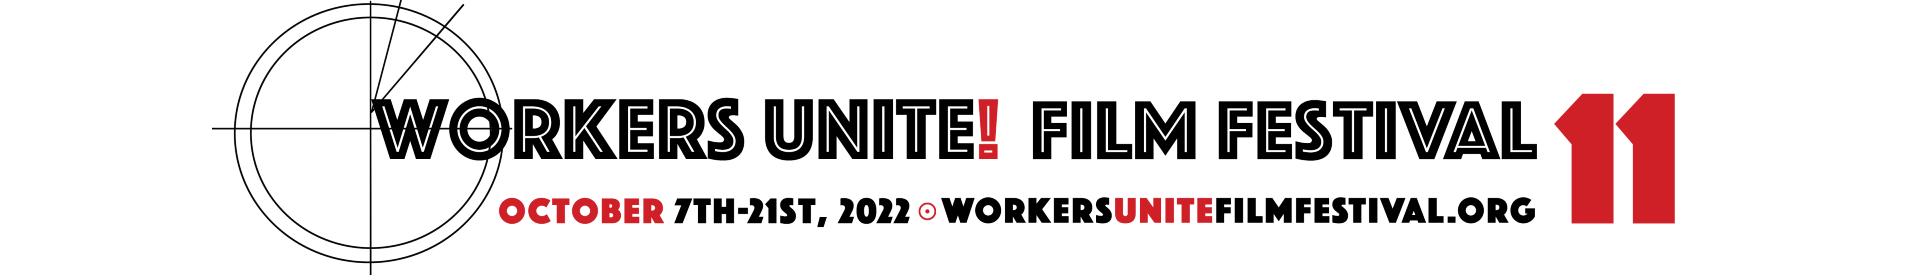 Workers Unite Film Festival 2022